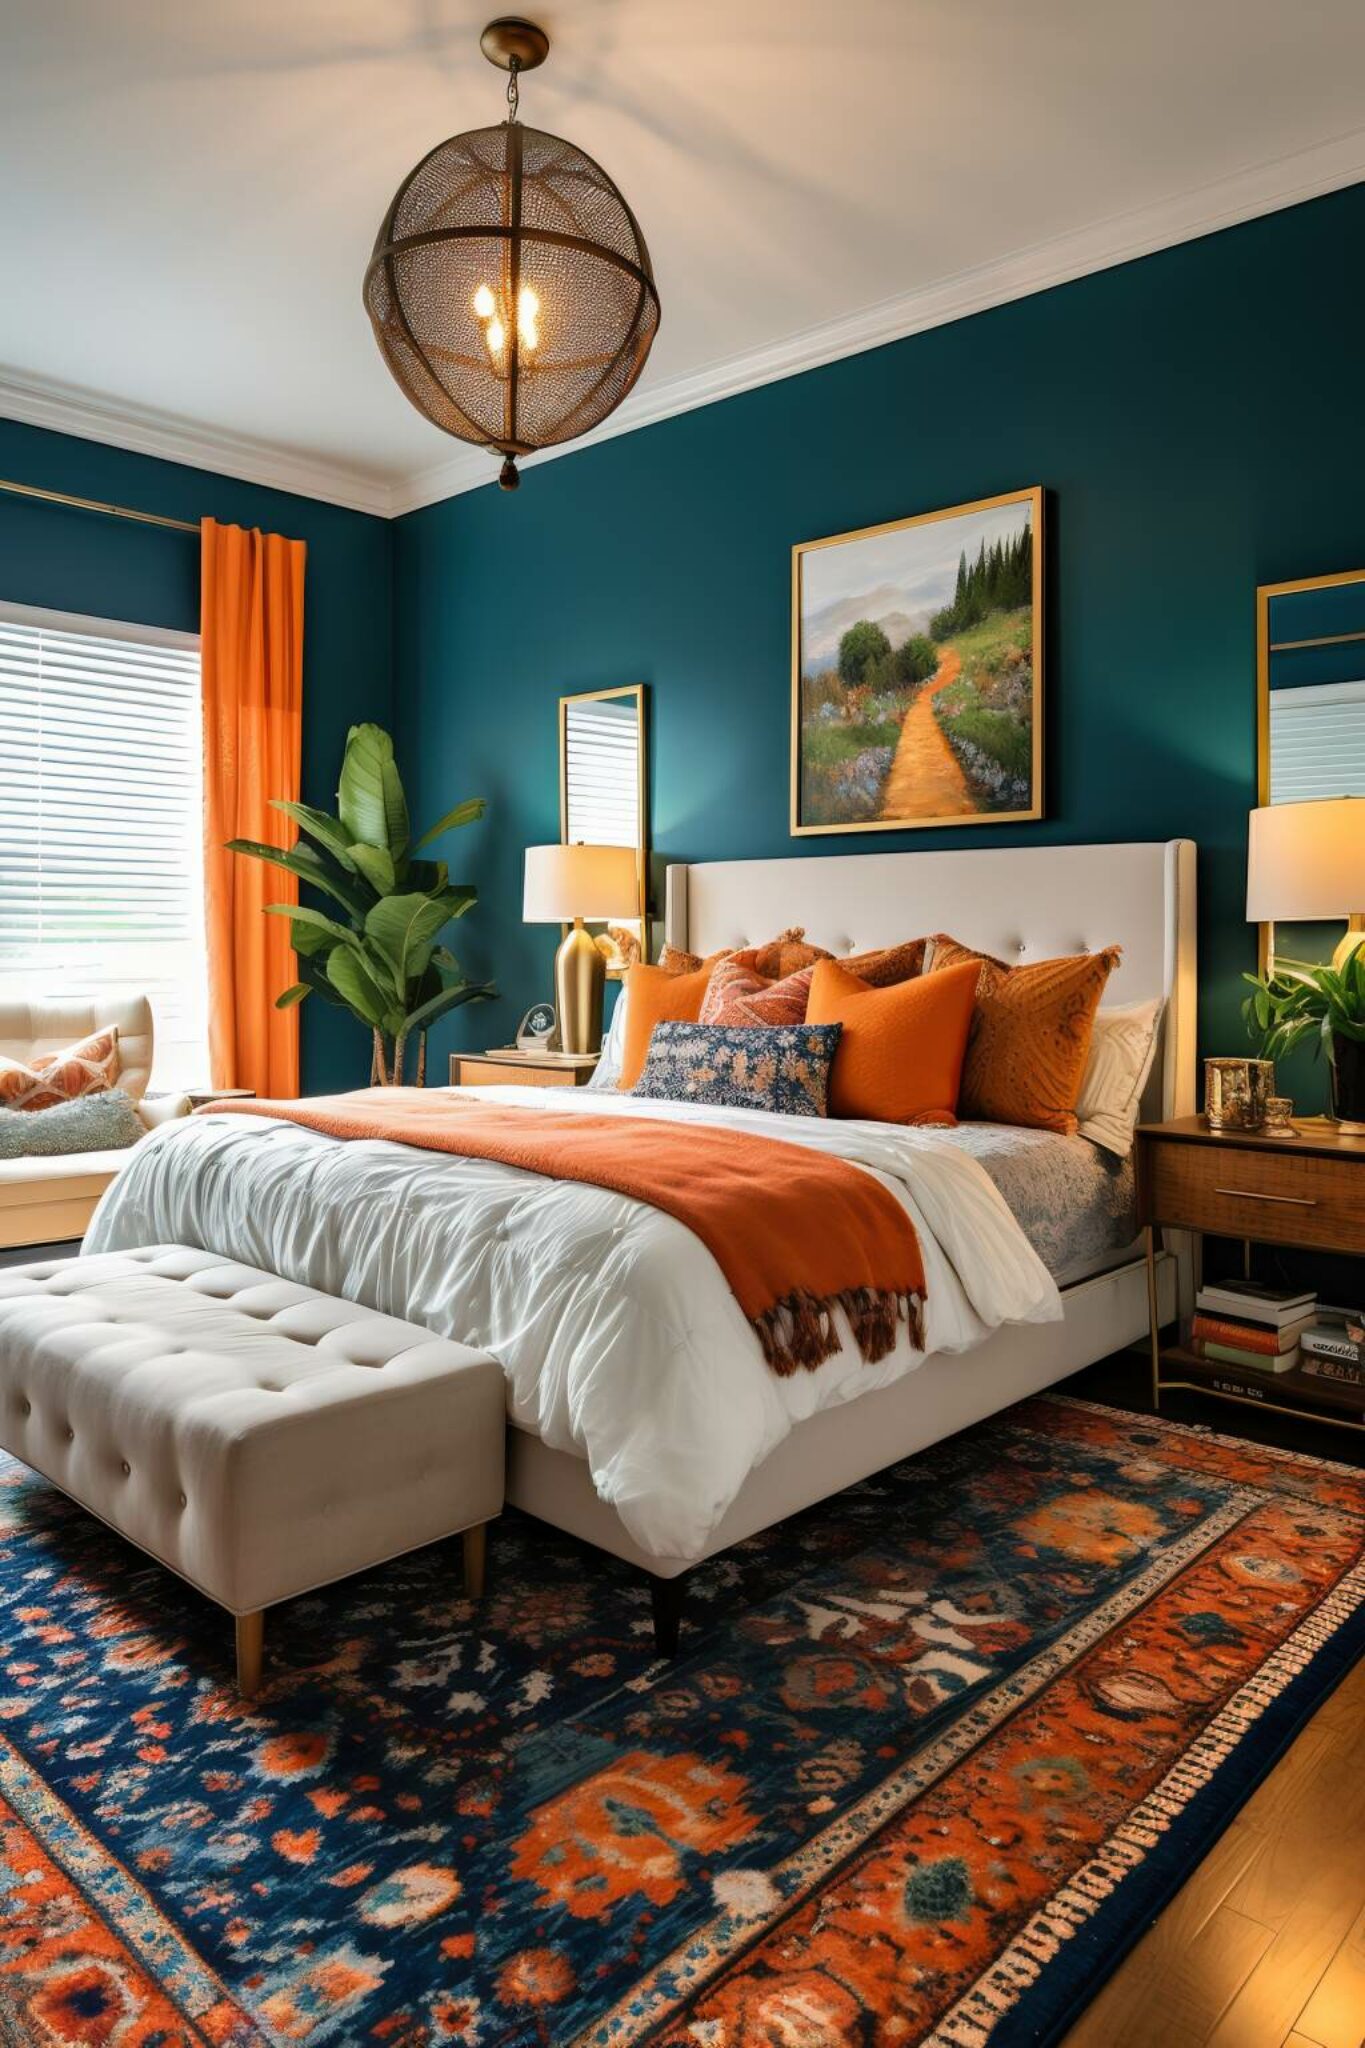 Teal and Orange bedroom